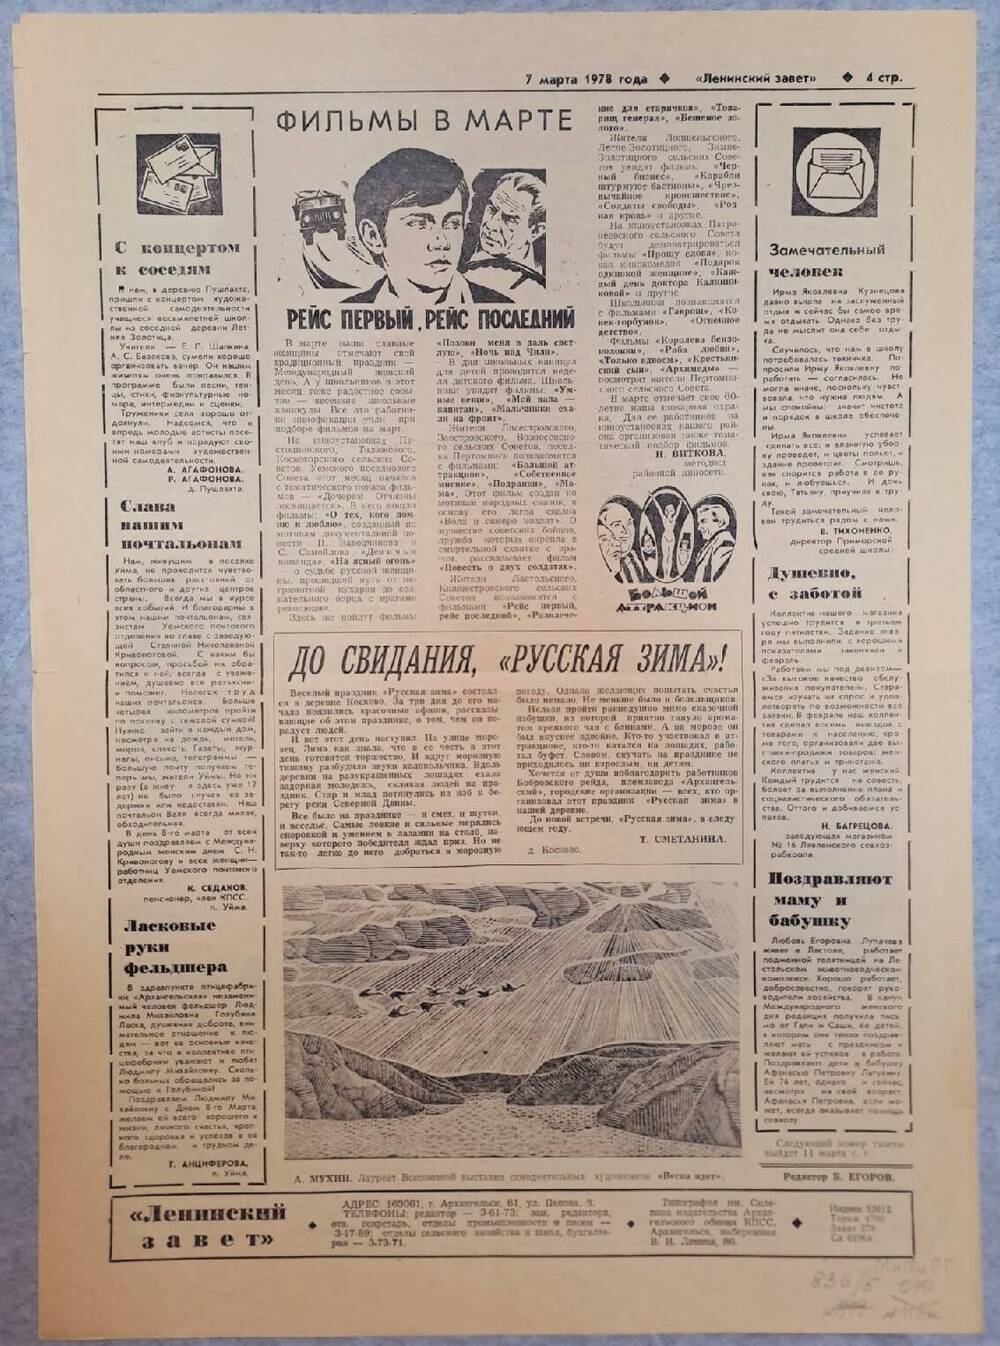 Газета Ленинский завет №28 (4868) от 7.03.1978 г.